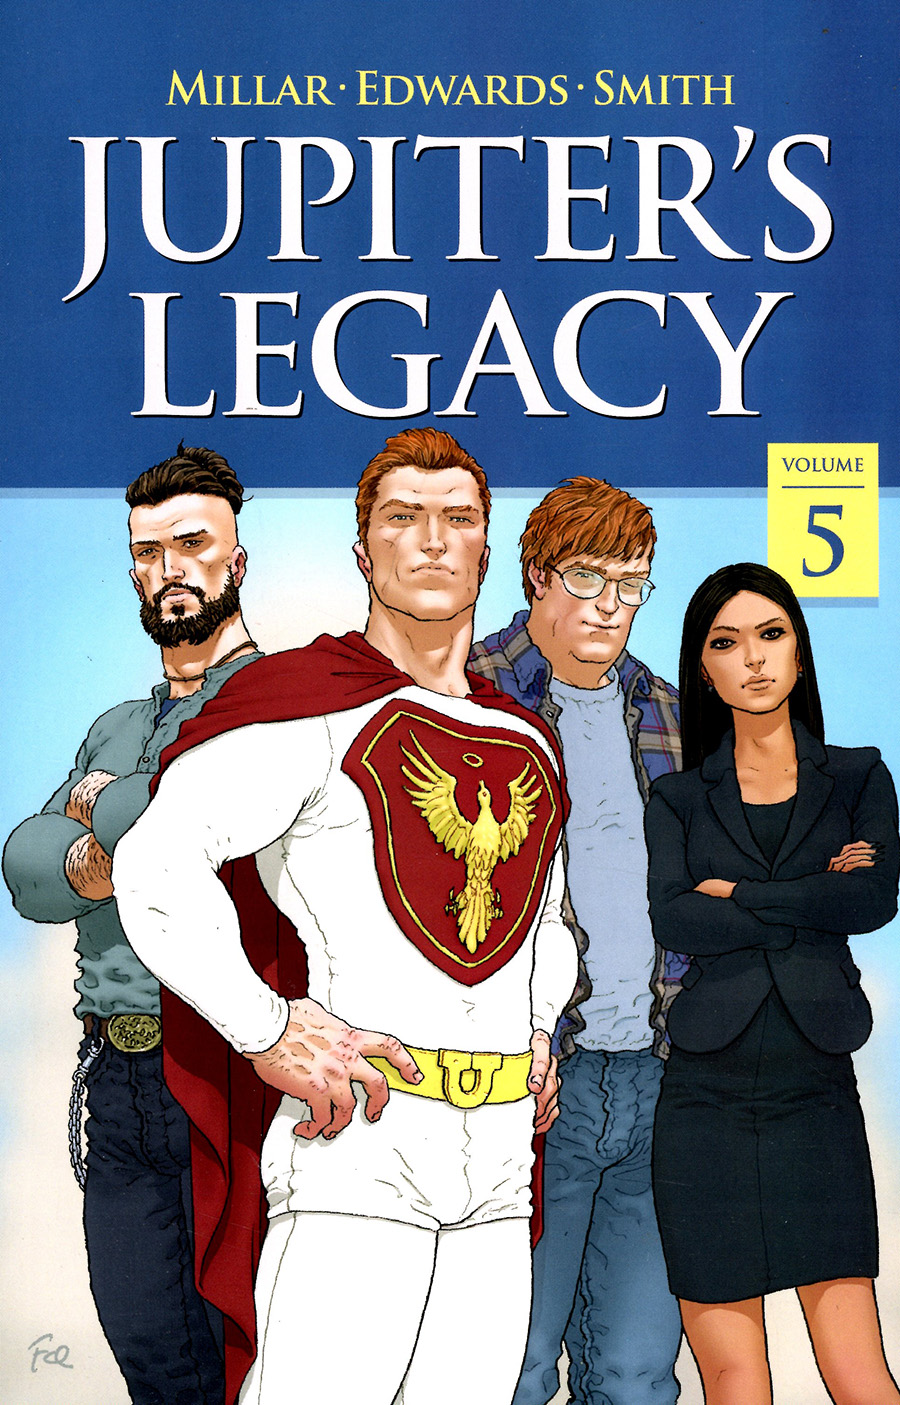 Jupiters Legacy Vol 5 TP Netflix Edition